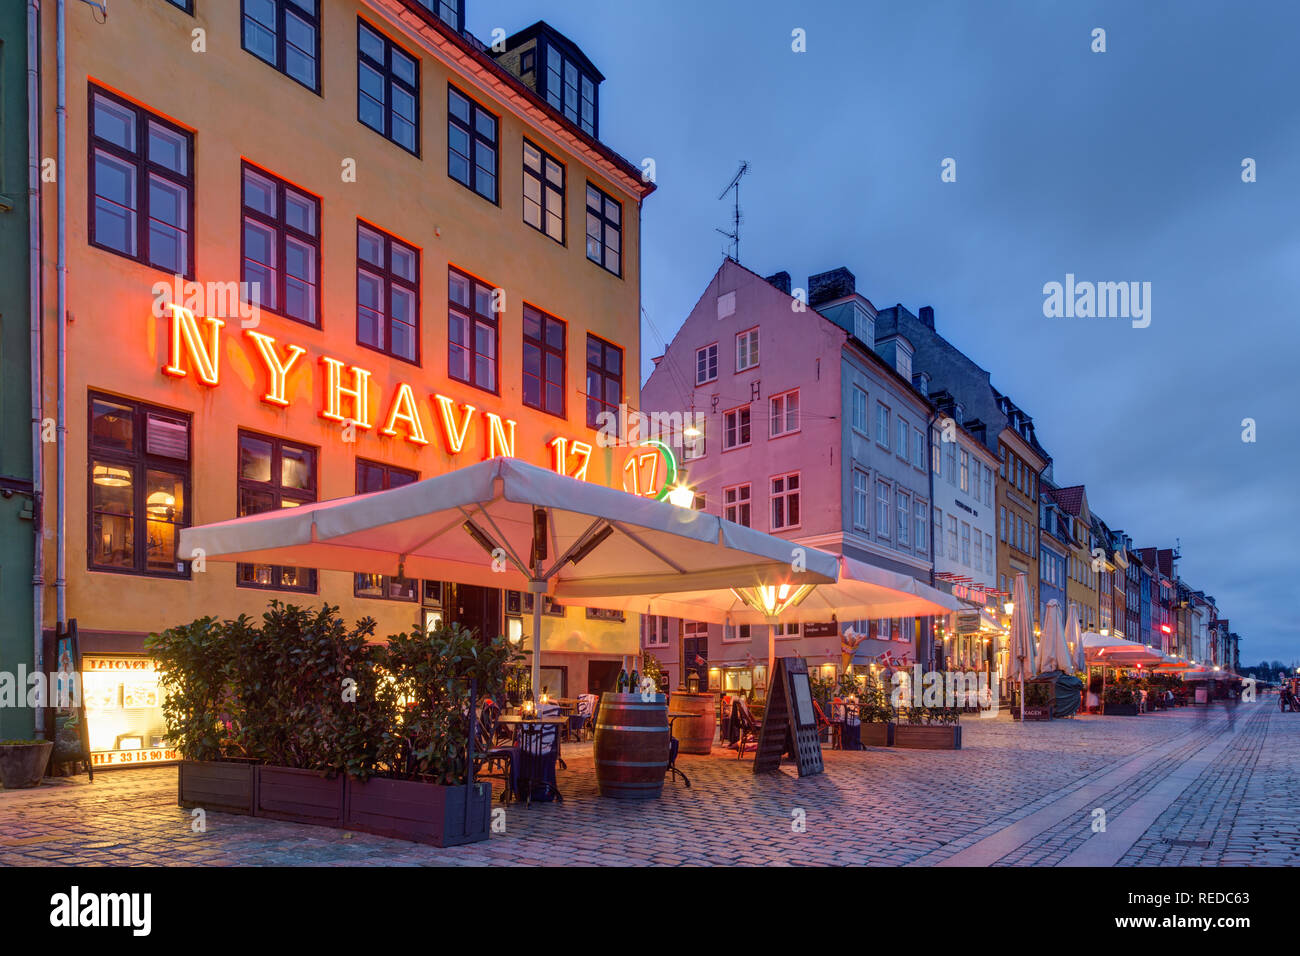 Nyhavn harbor in Copenhagen at night Stock Photo